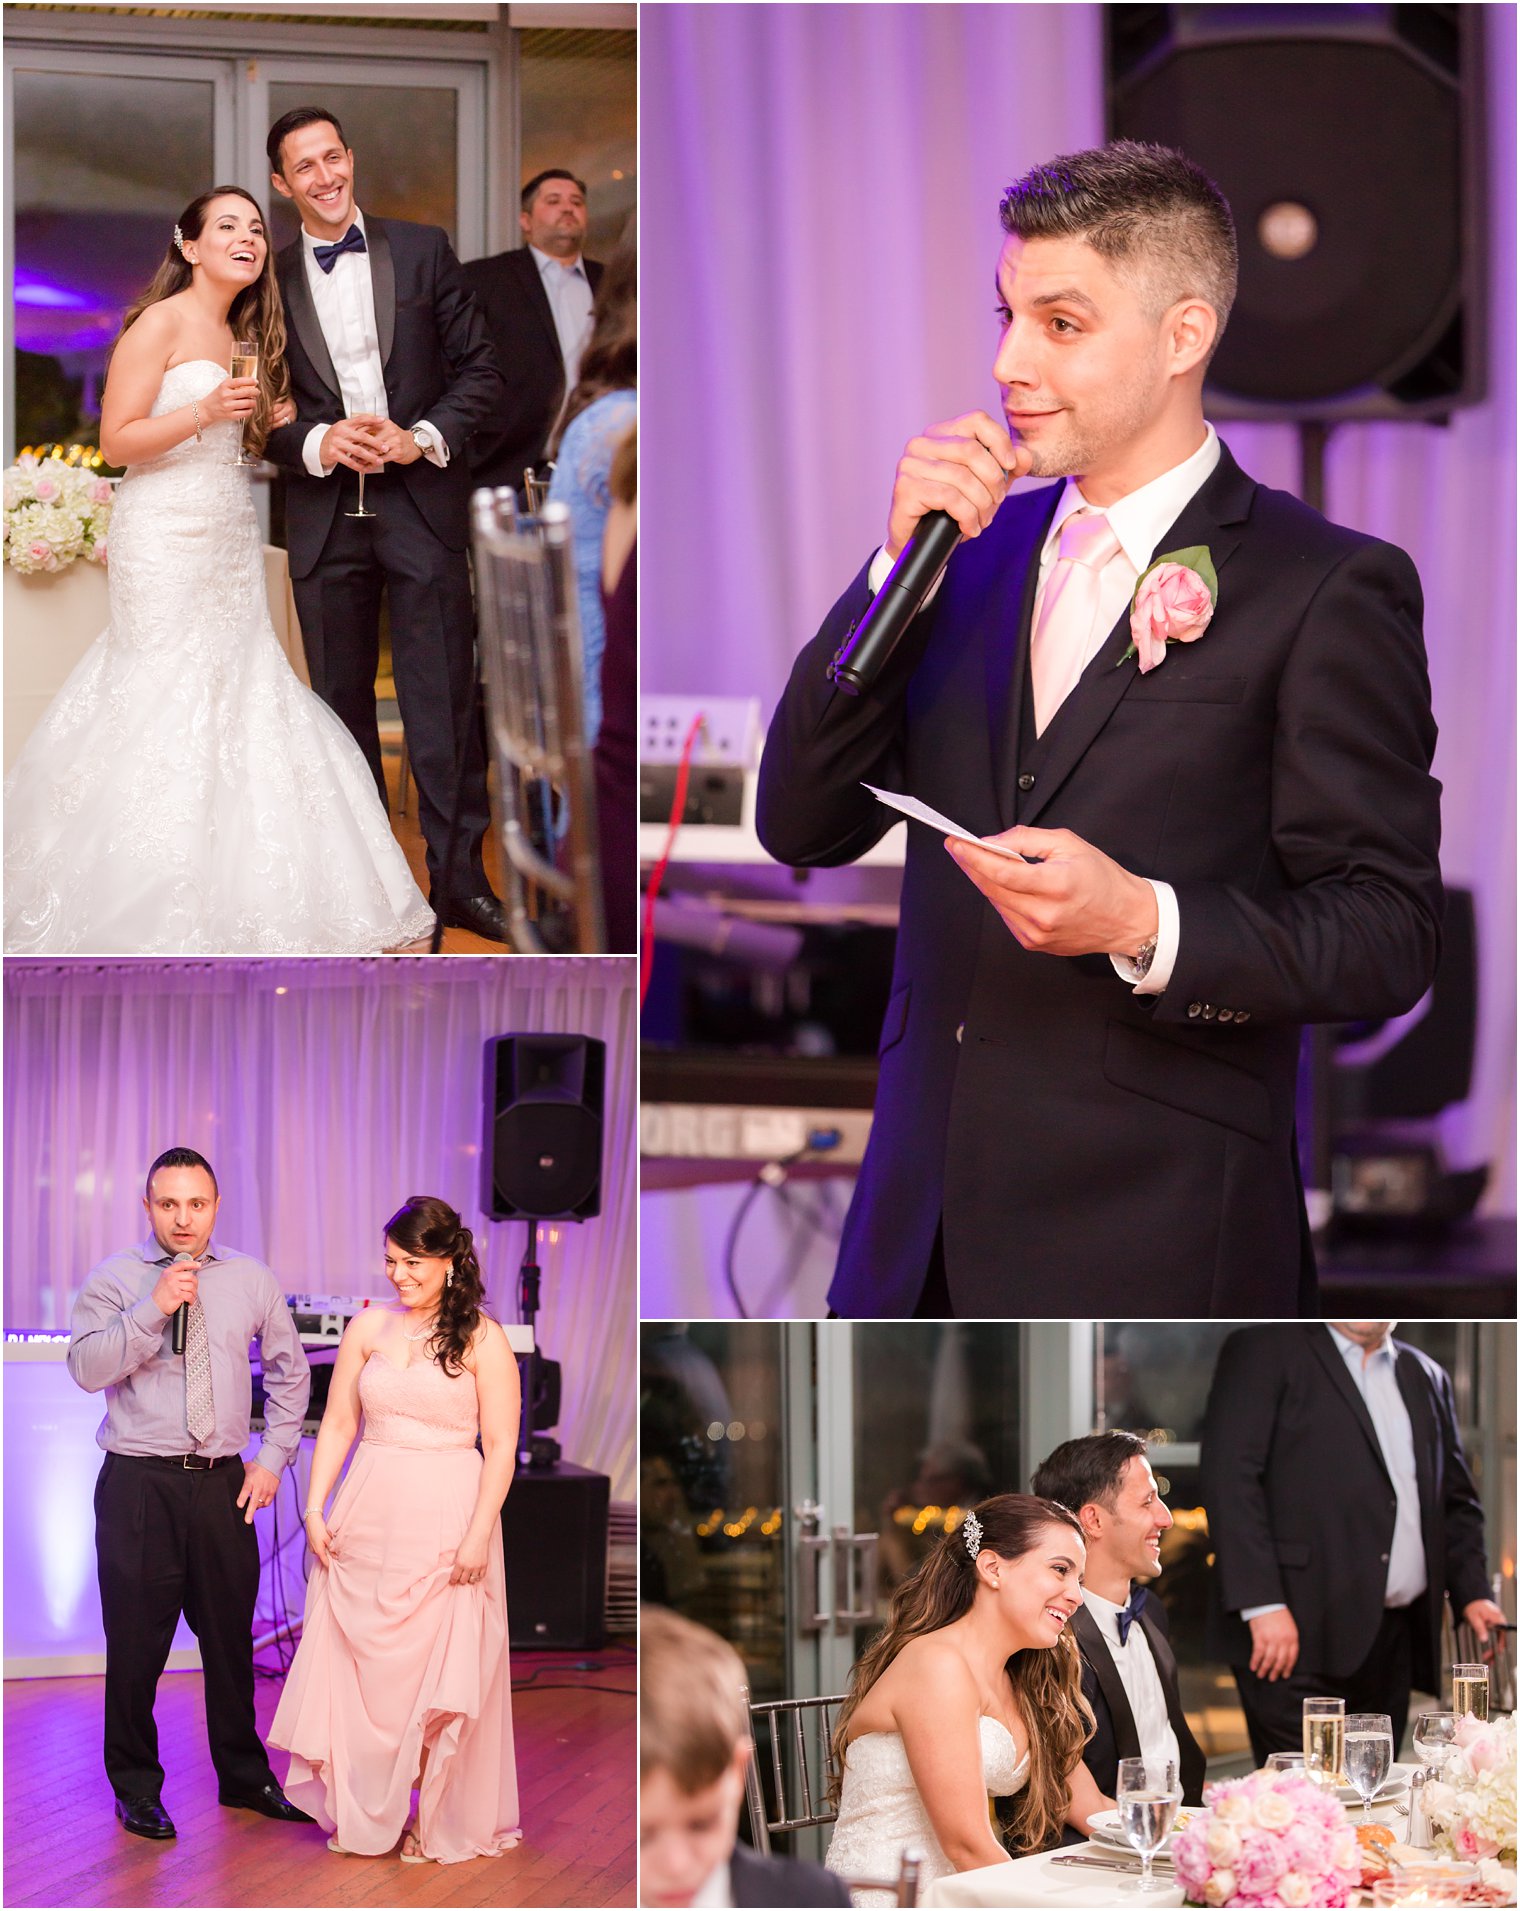 Photos of toasts at NYC Wedding | Photos by Idalia Photography